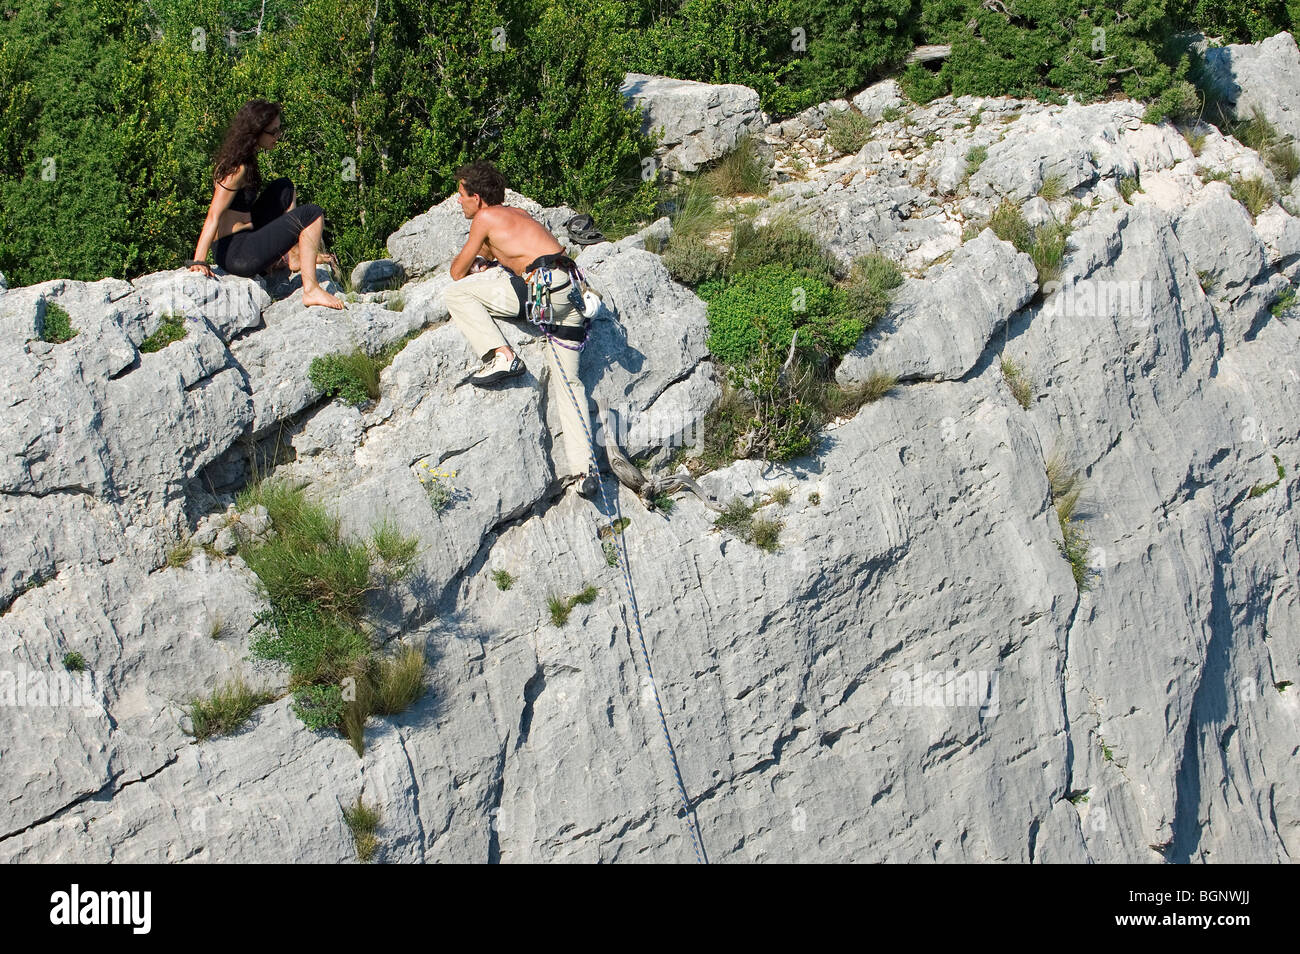 Rock climbers climbing the steep limestone cliffs in the canyon Gorges du Verdon / Verdon Gorge, Provence, France Stock Photo